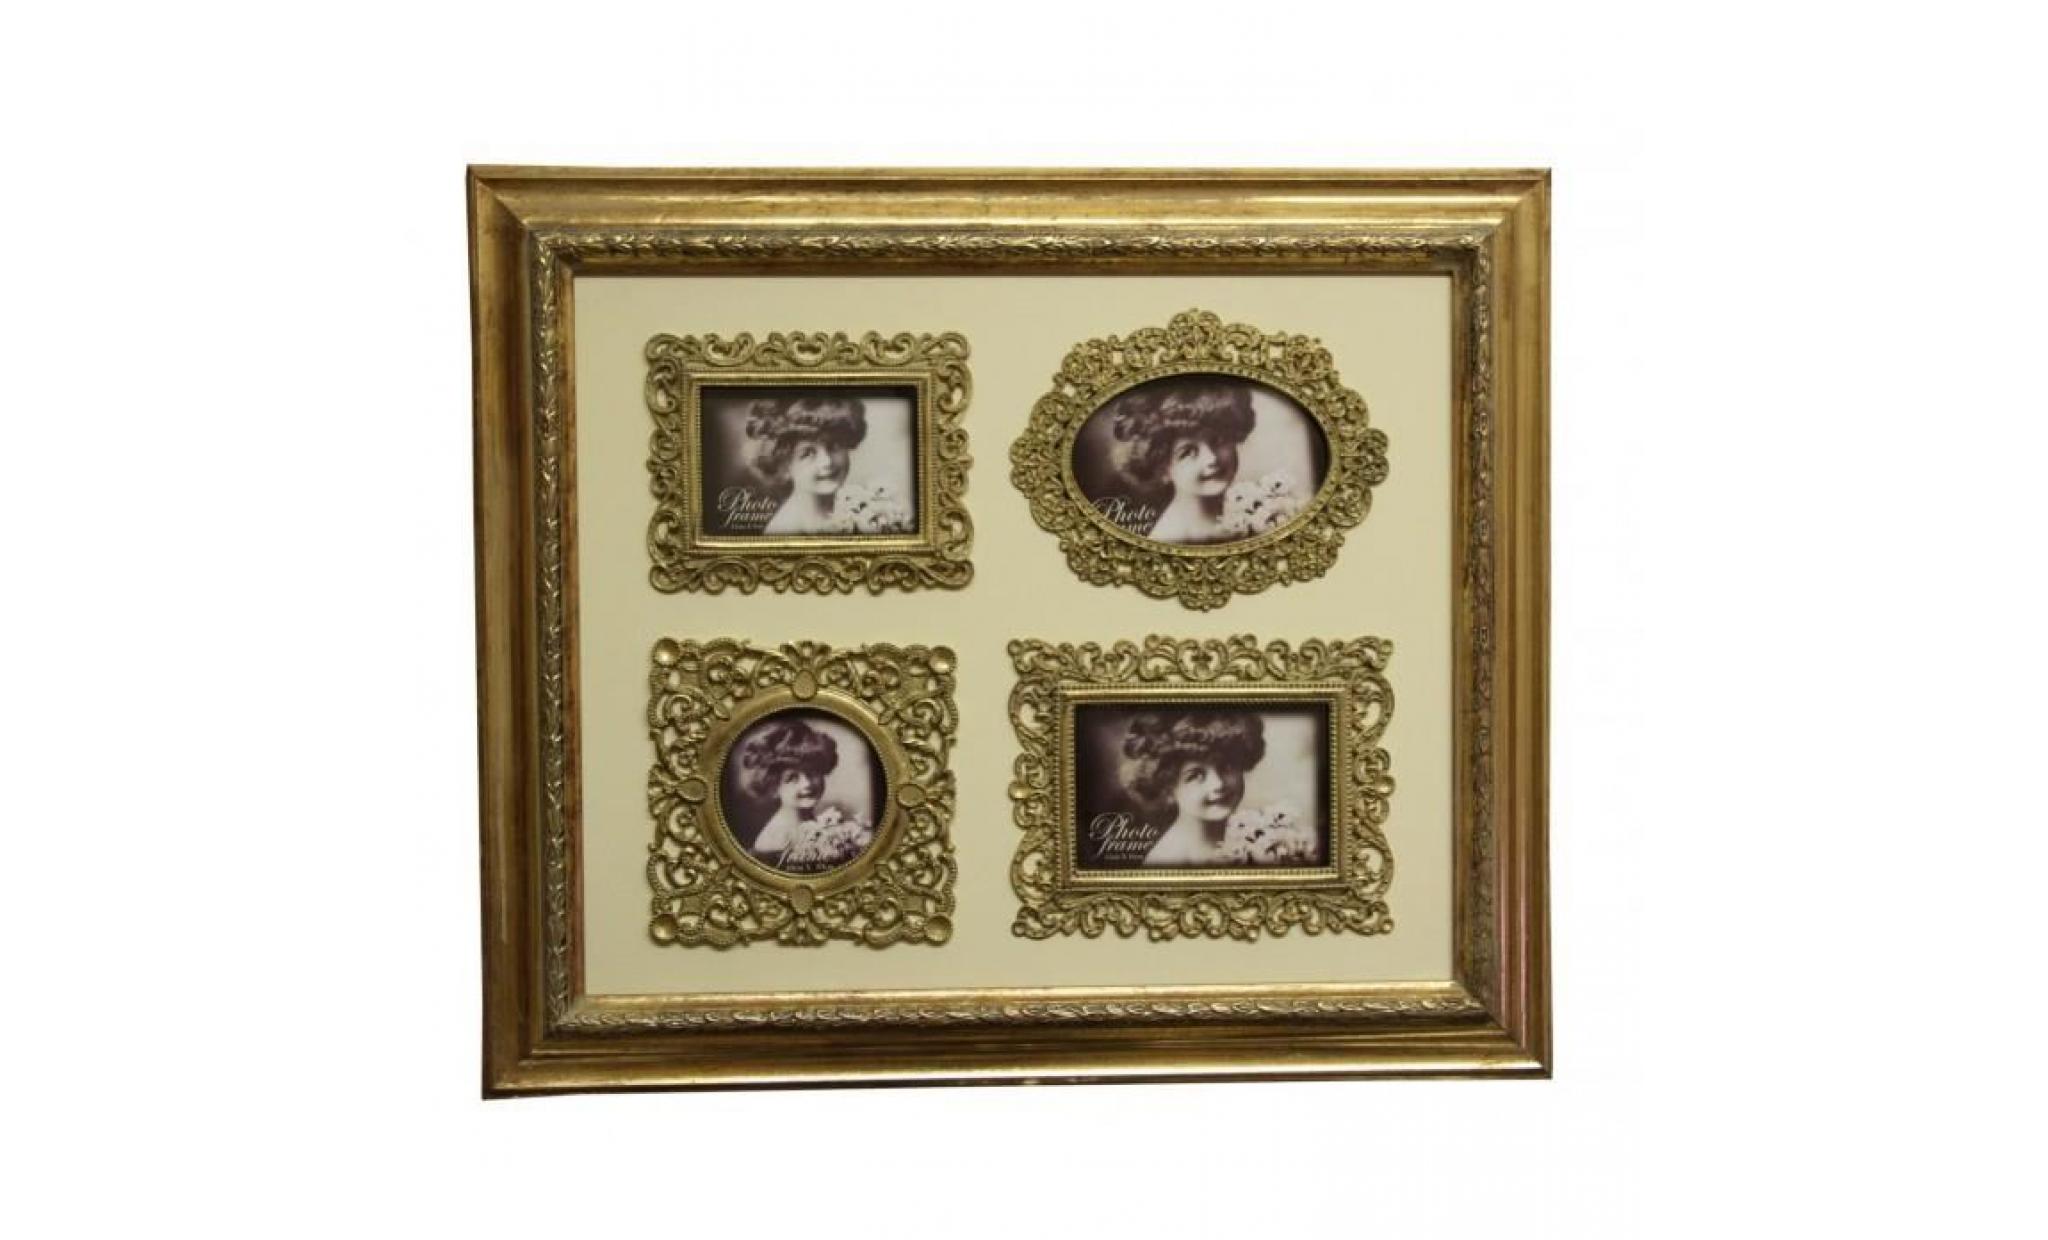 baroque wall picture frames gold mod kl17 family frame h 50 cm, width 58 cm   photo picture frame art nouveau antique